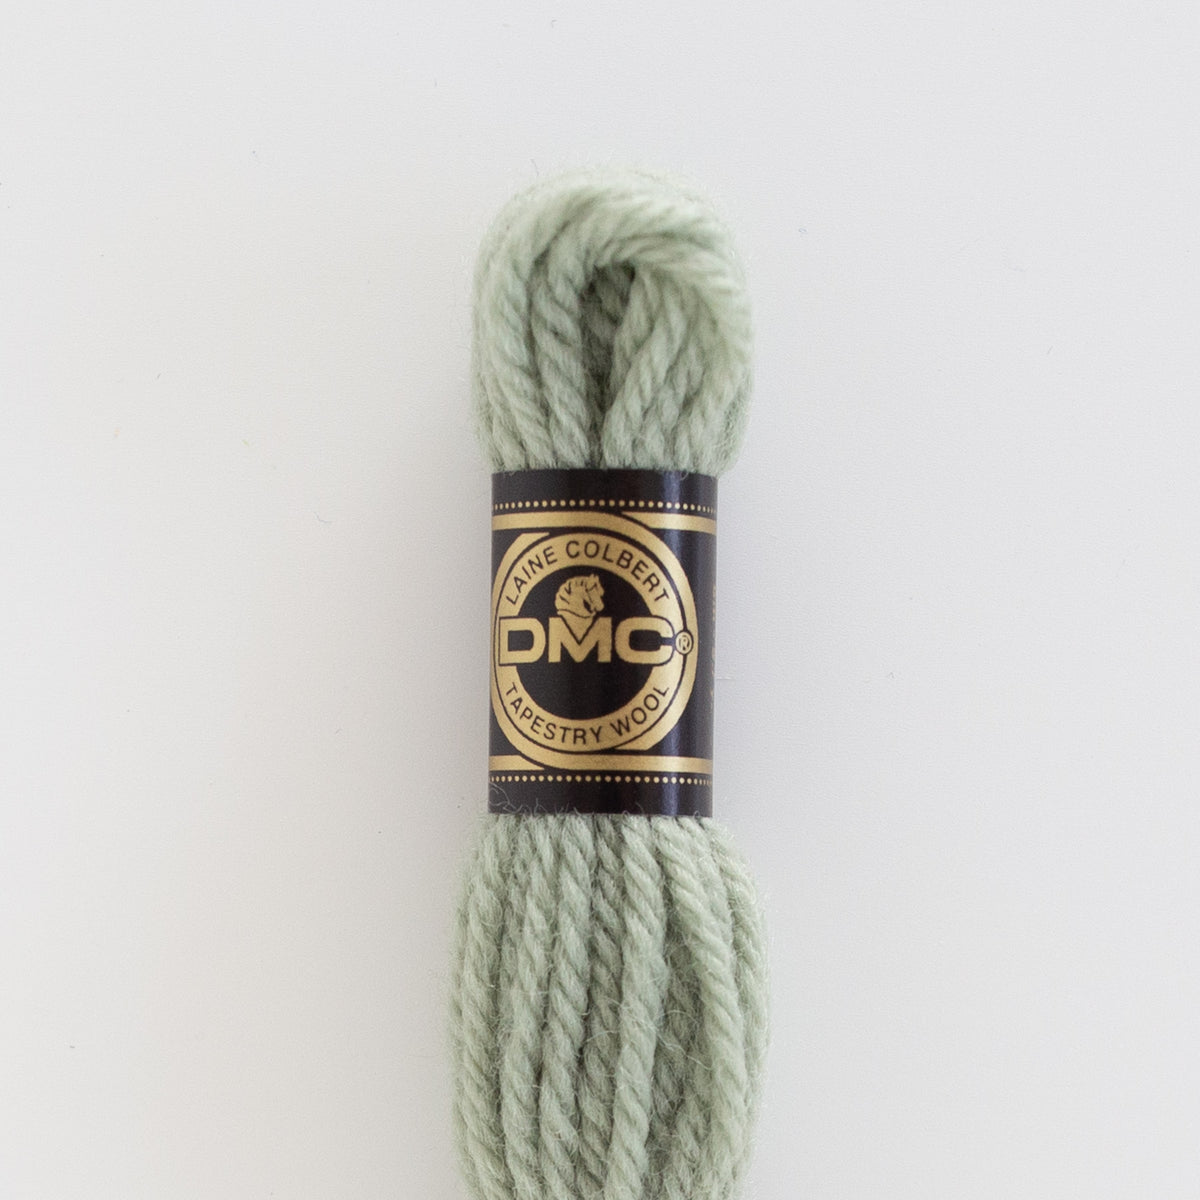 DMC Laine Colbert Tapestry wool 7870